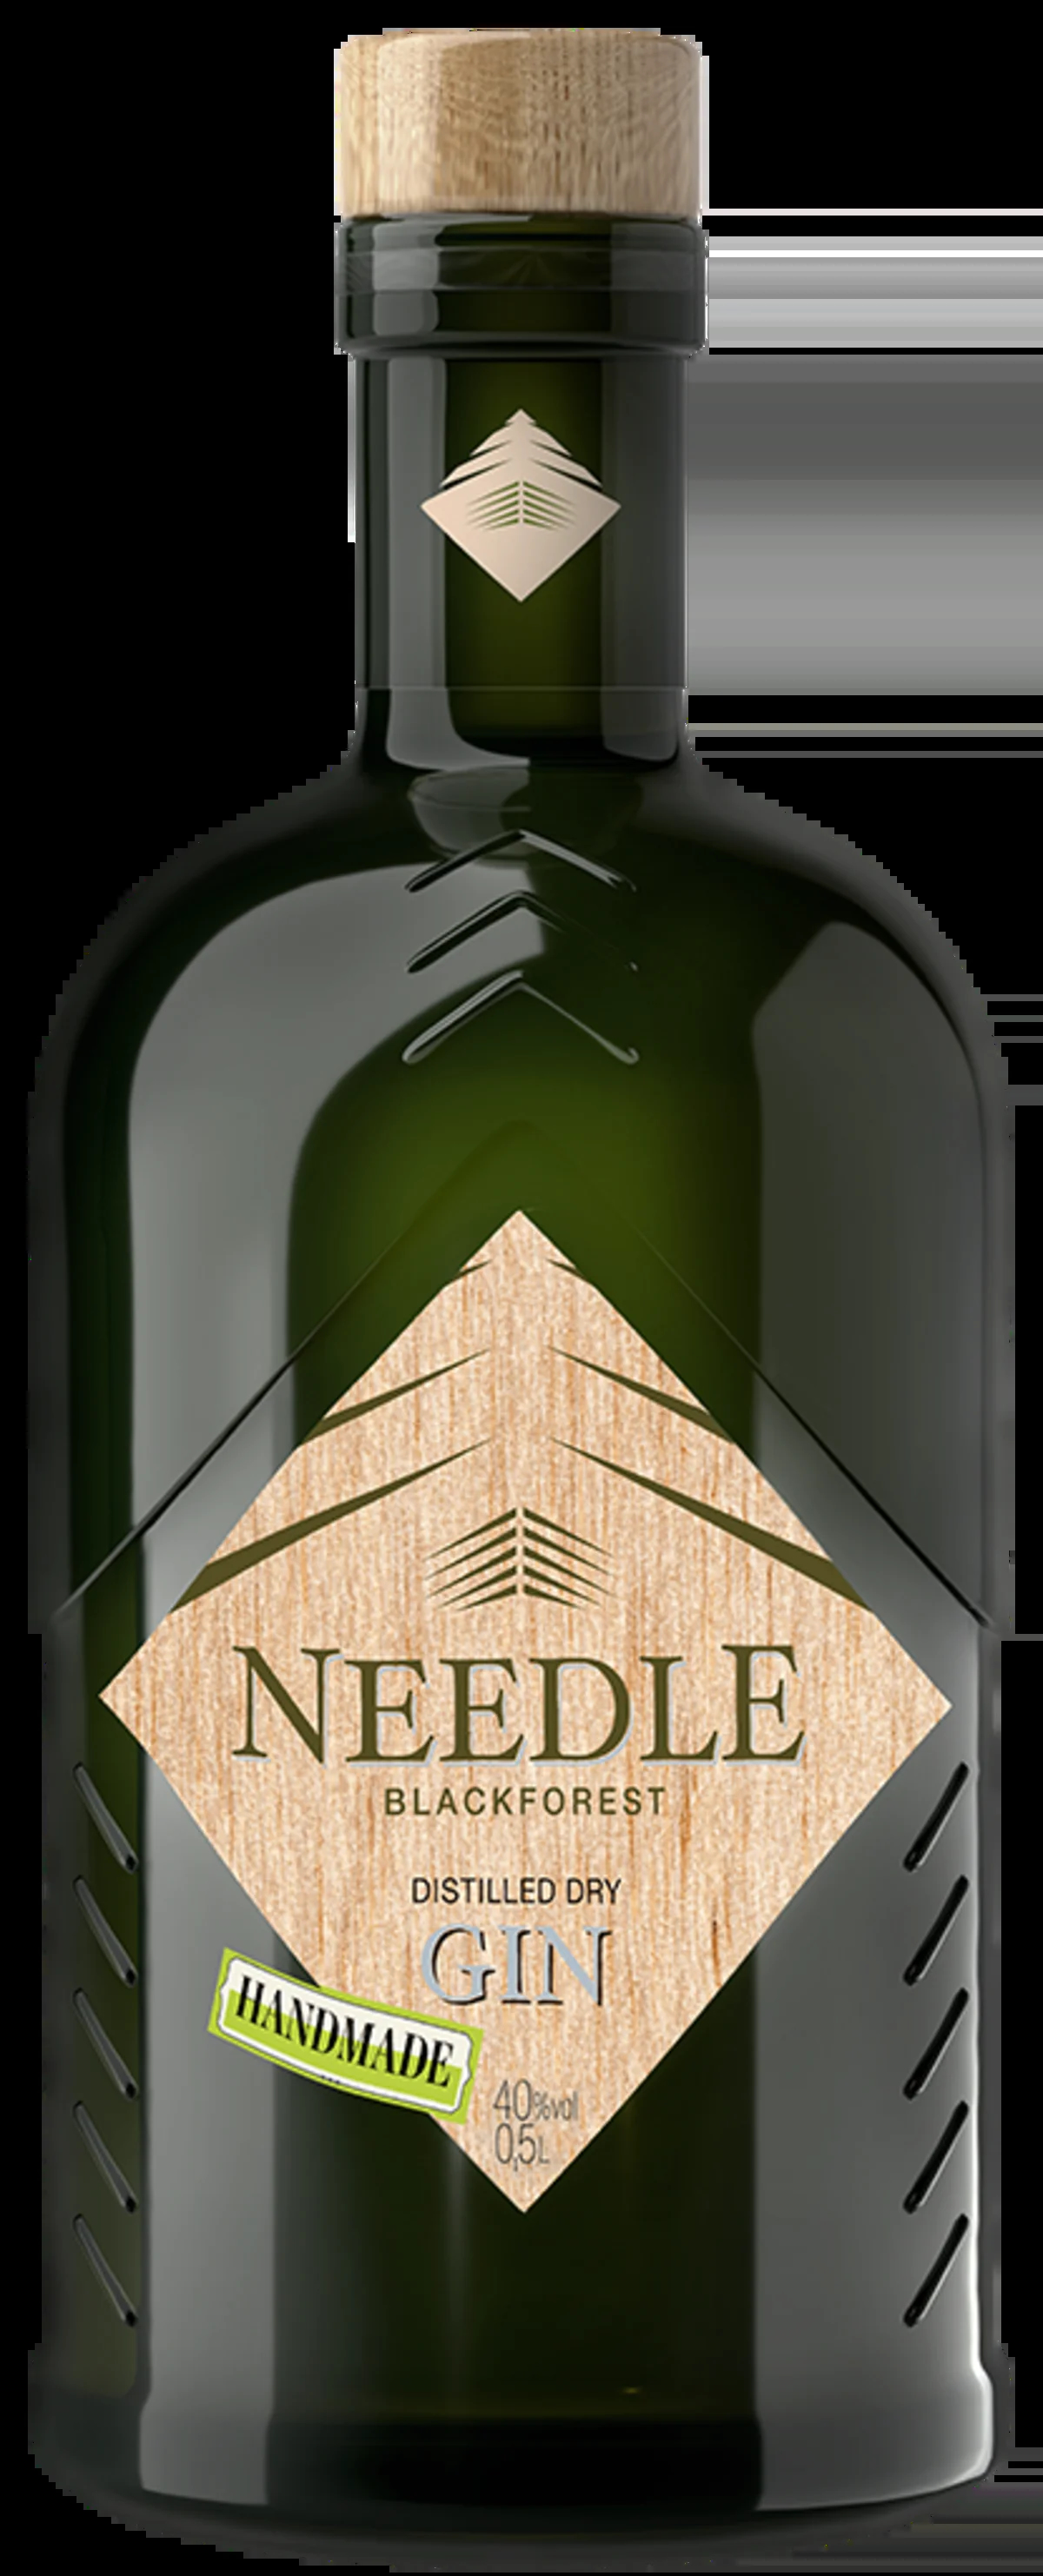 Illustration Needle Black Forest Distilled Dry Gin